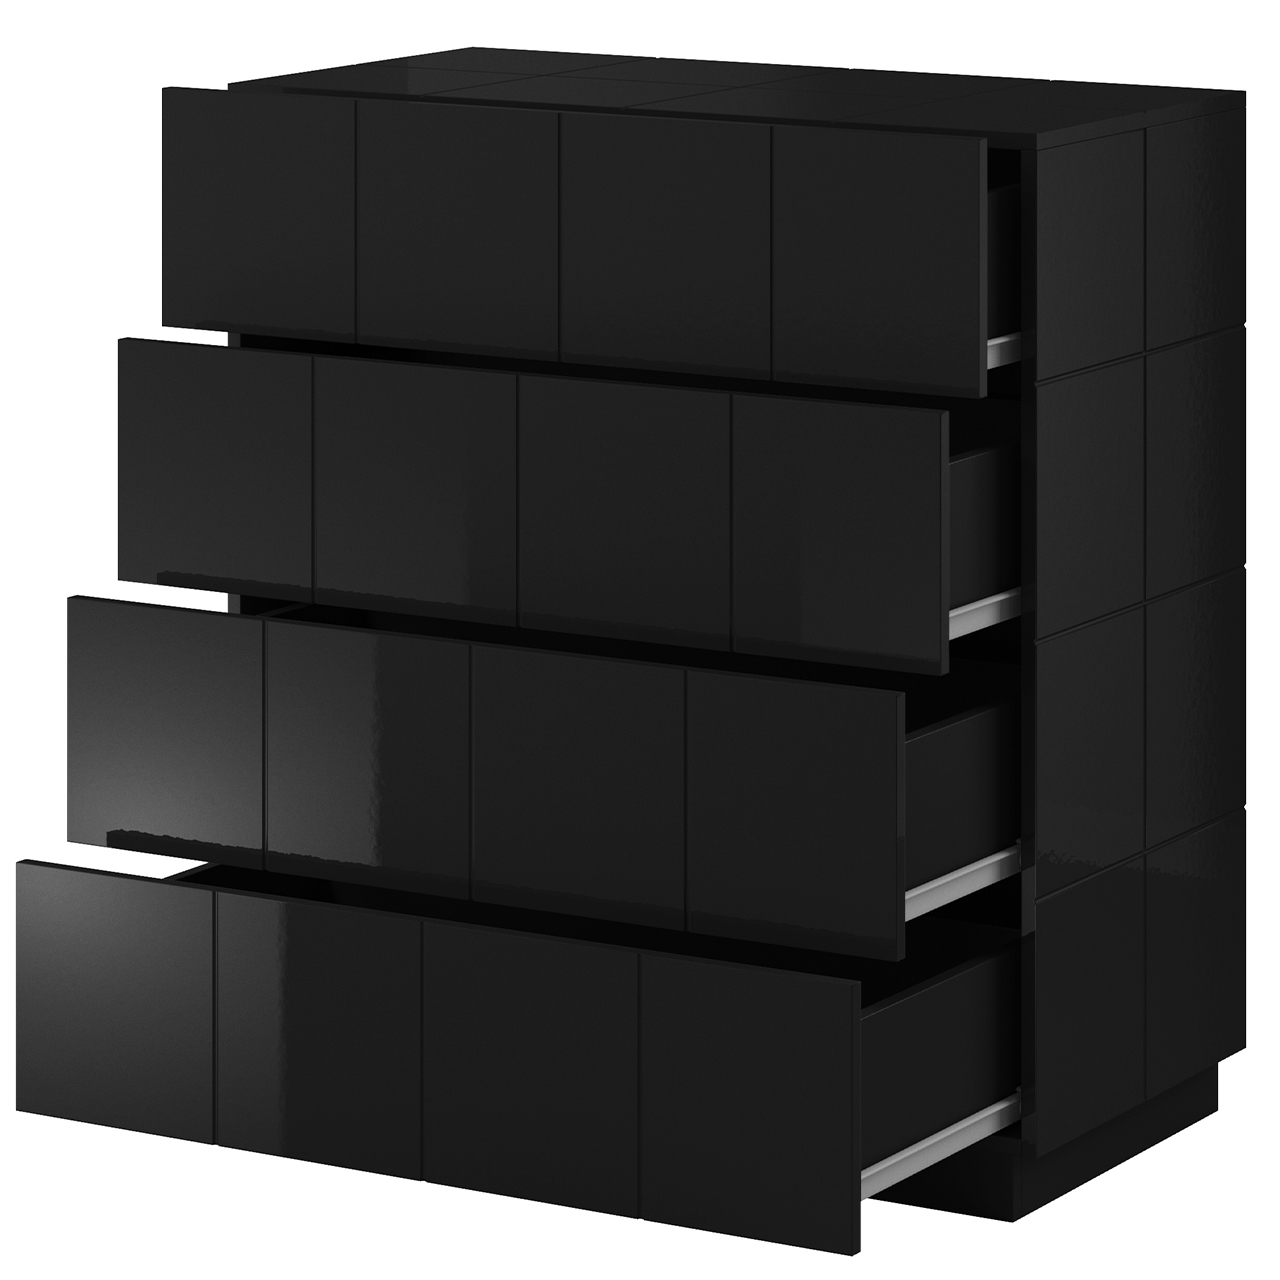 Storage cabinet REJA 4S black gloss